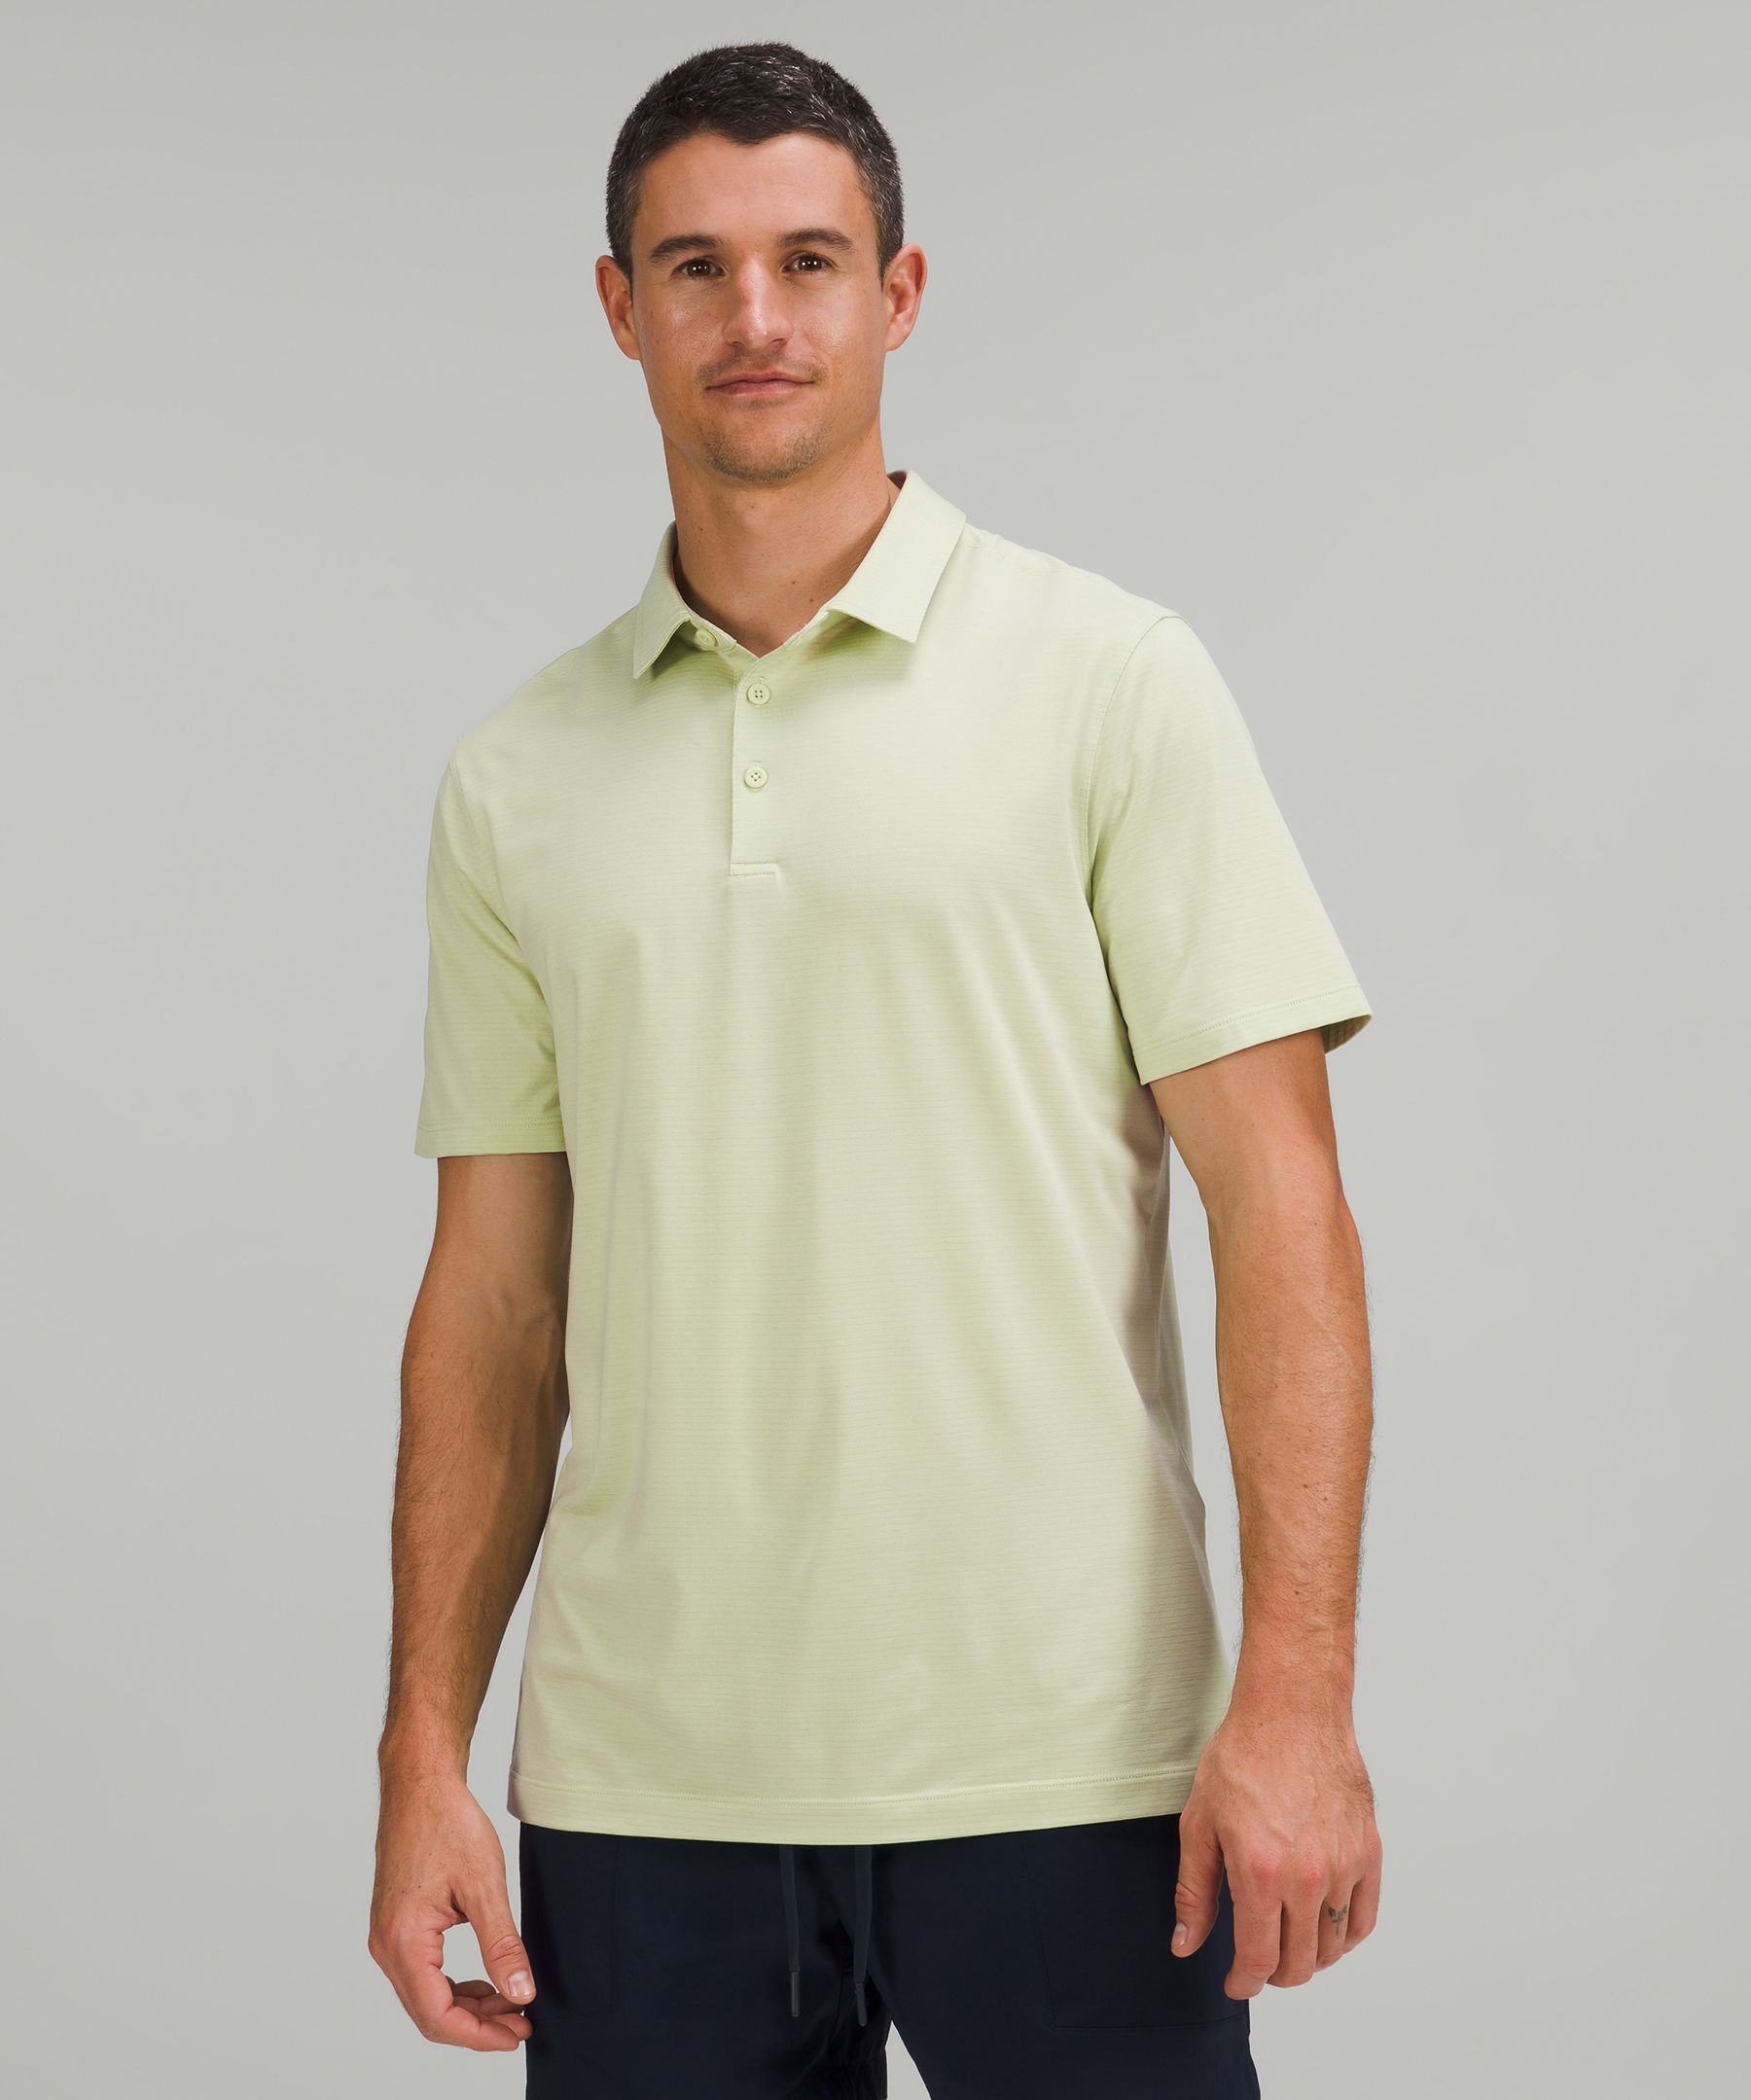 Lululemon Evolution Short Sleeve Polo Shirt In Creamy Mint